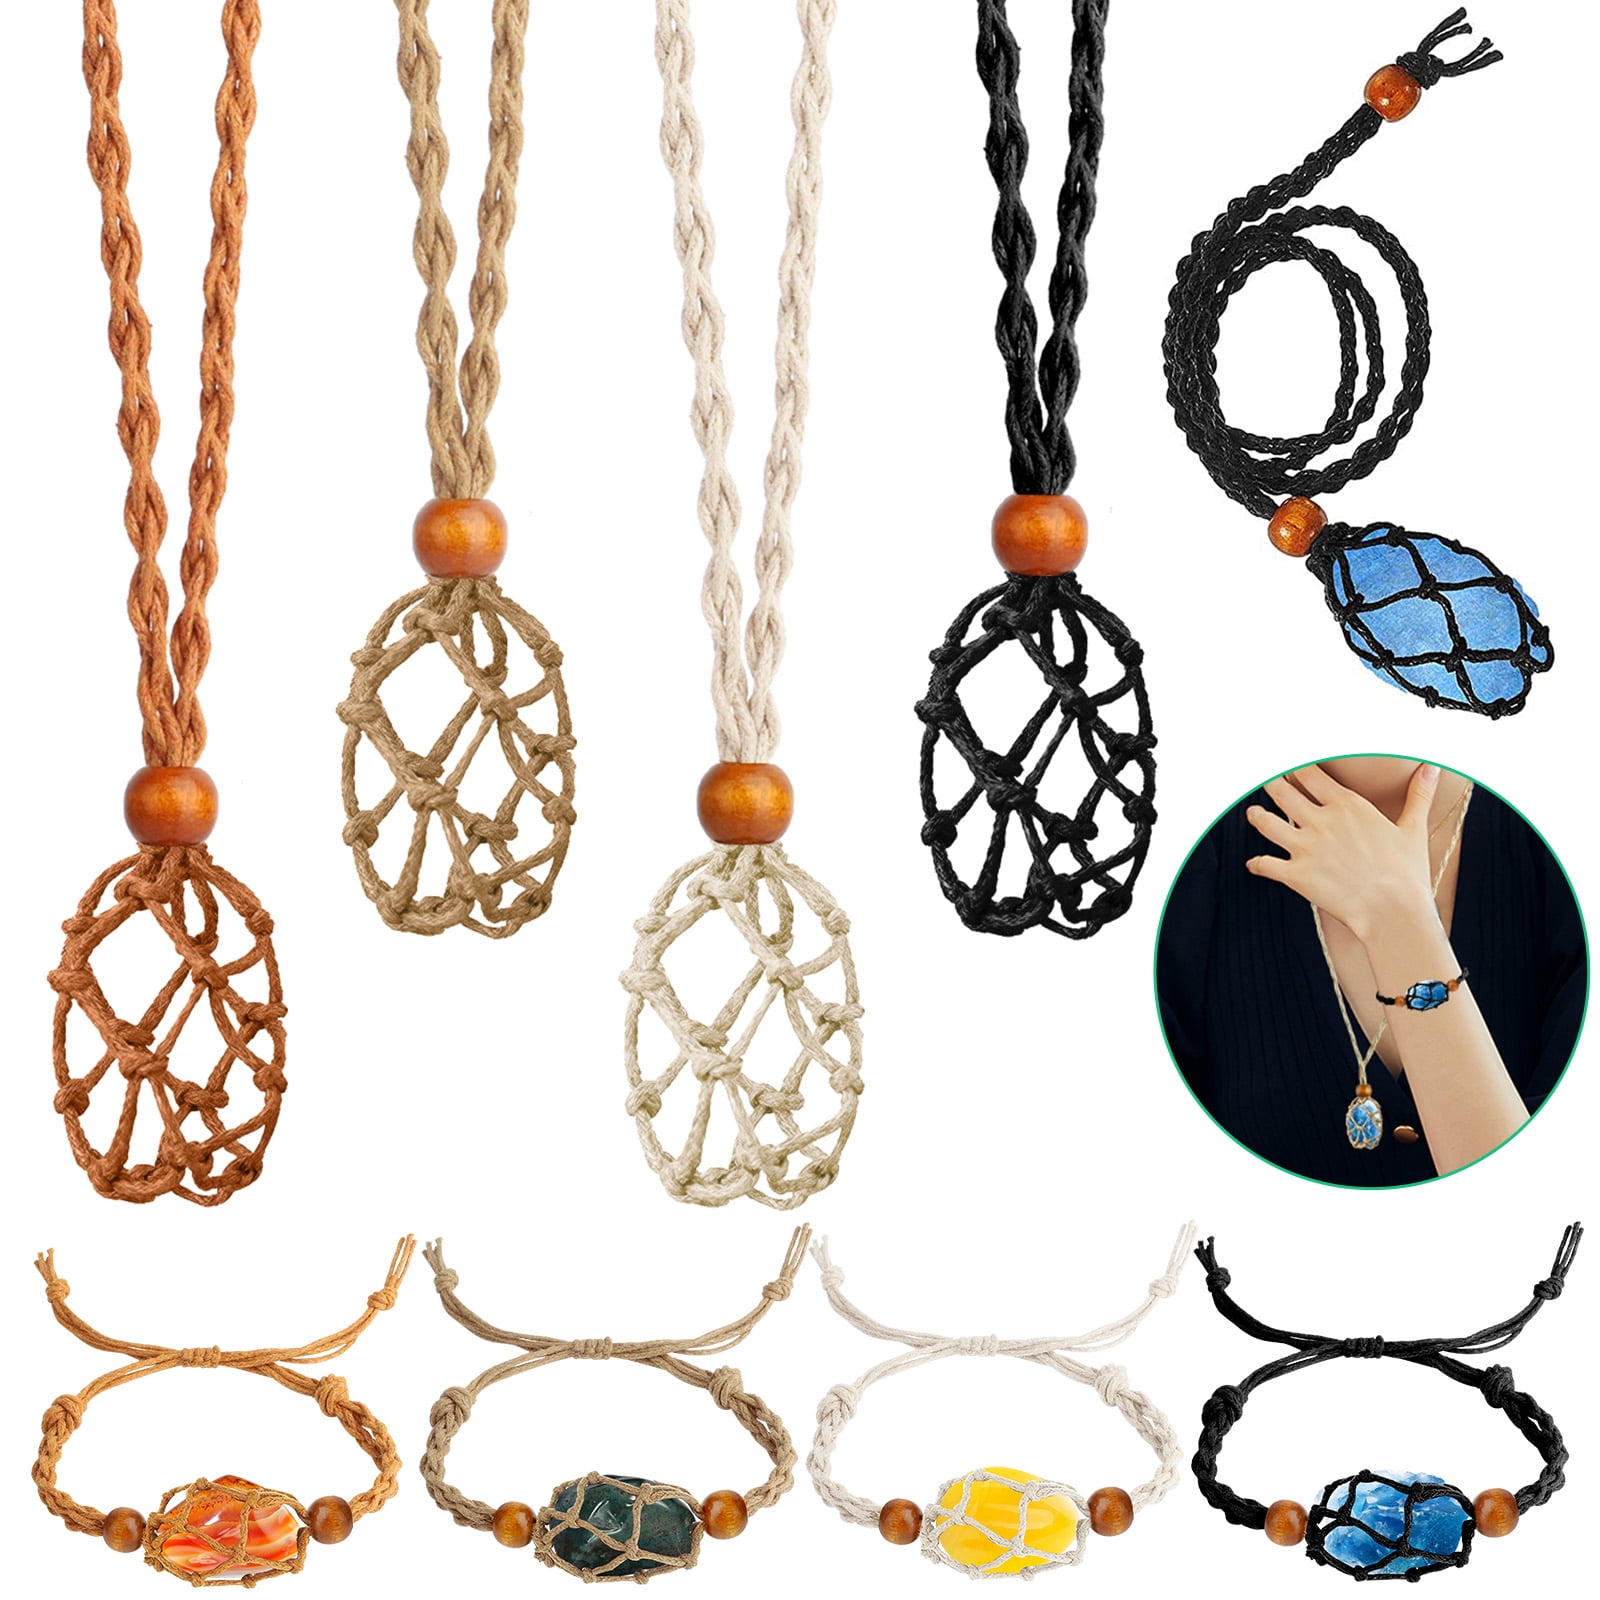 Adjustable crystal cage necklace,stone holder,hemp cord necklace